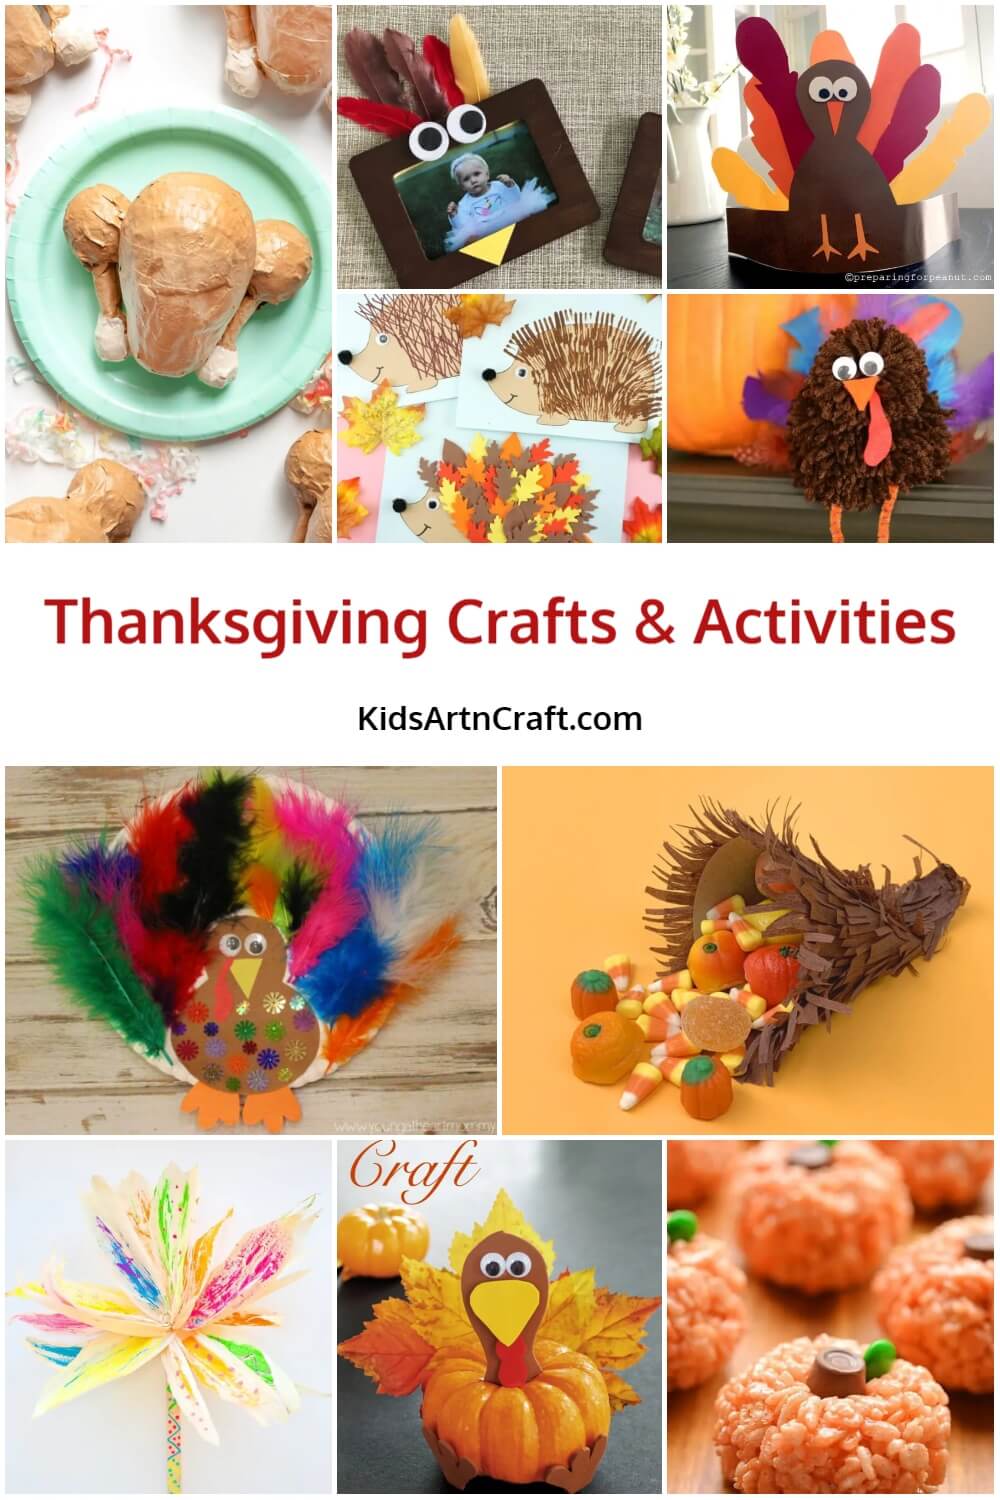 Thanksgiving Crafts & Activities for Kids - Kids Art & Craft